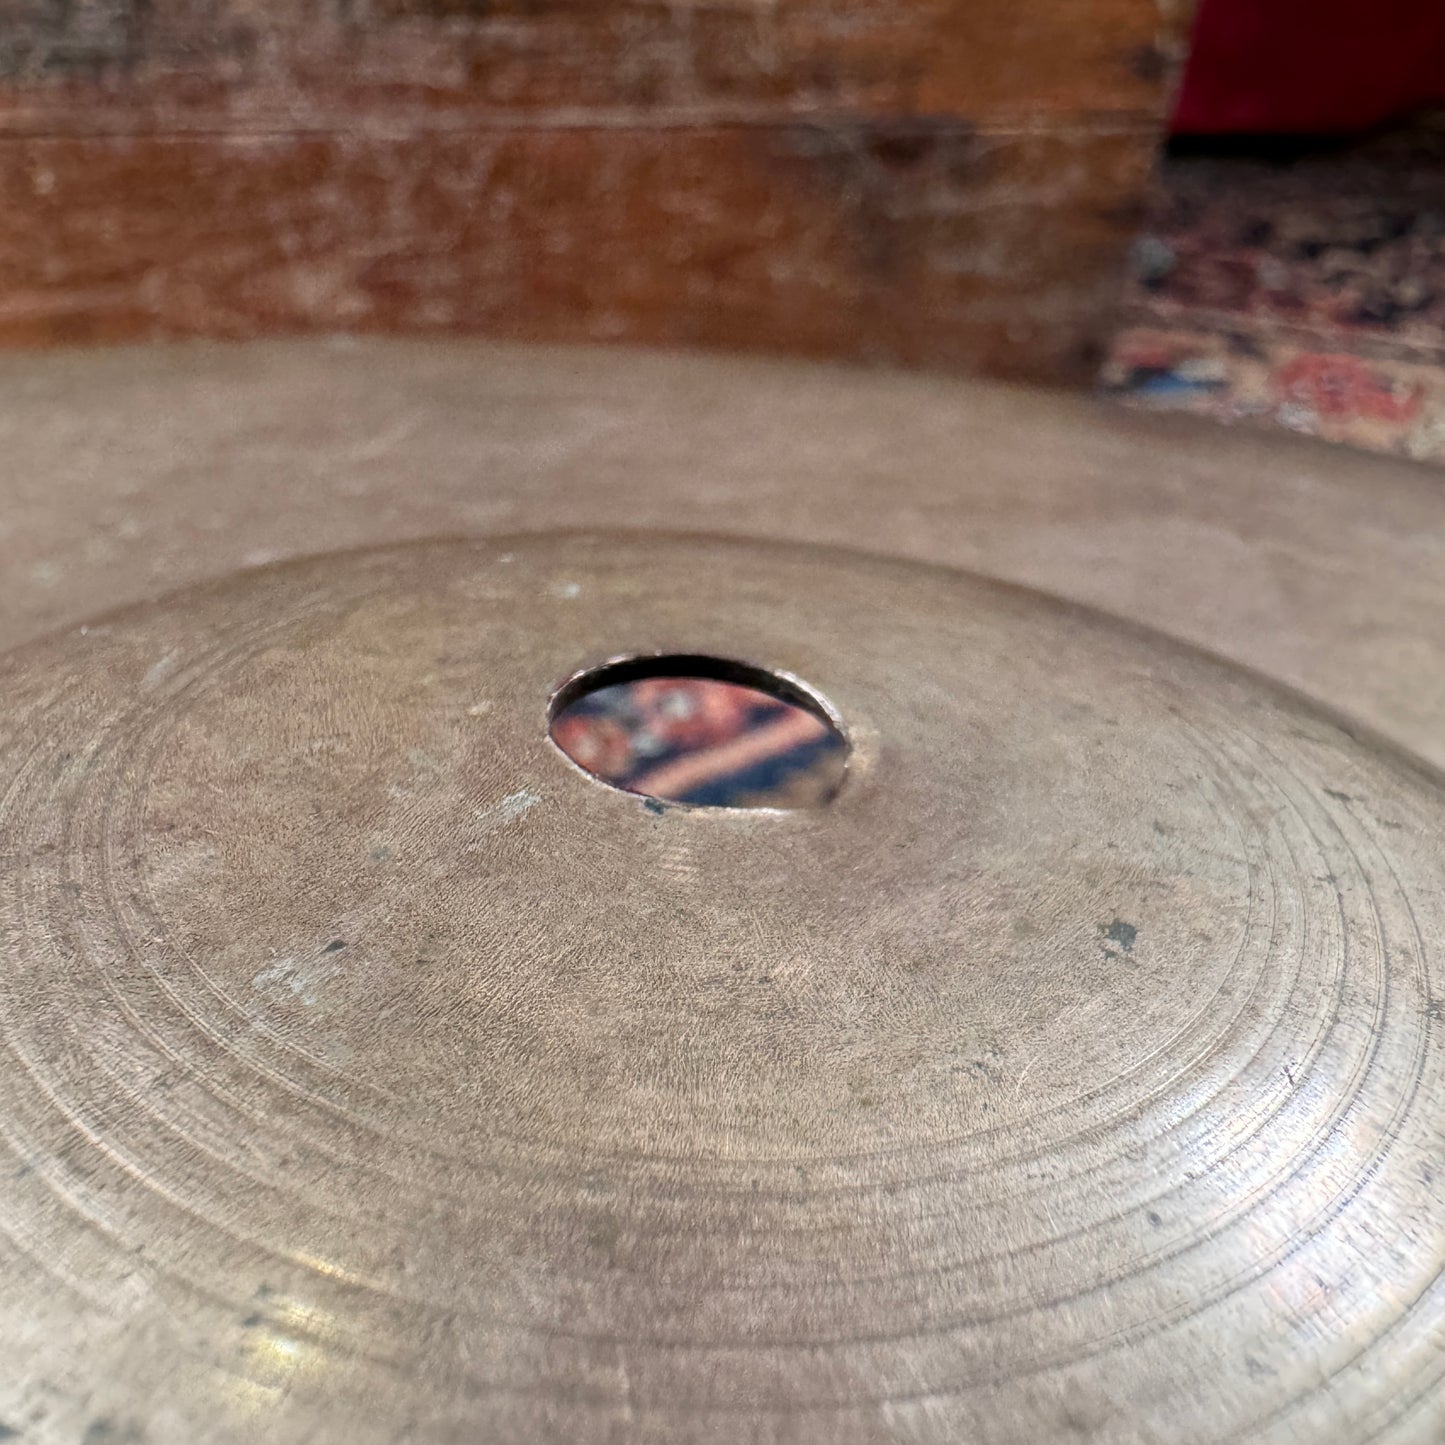 22" Zildjian A Custom Medium Ride Cymbal 3310g *Video Demo*